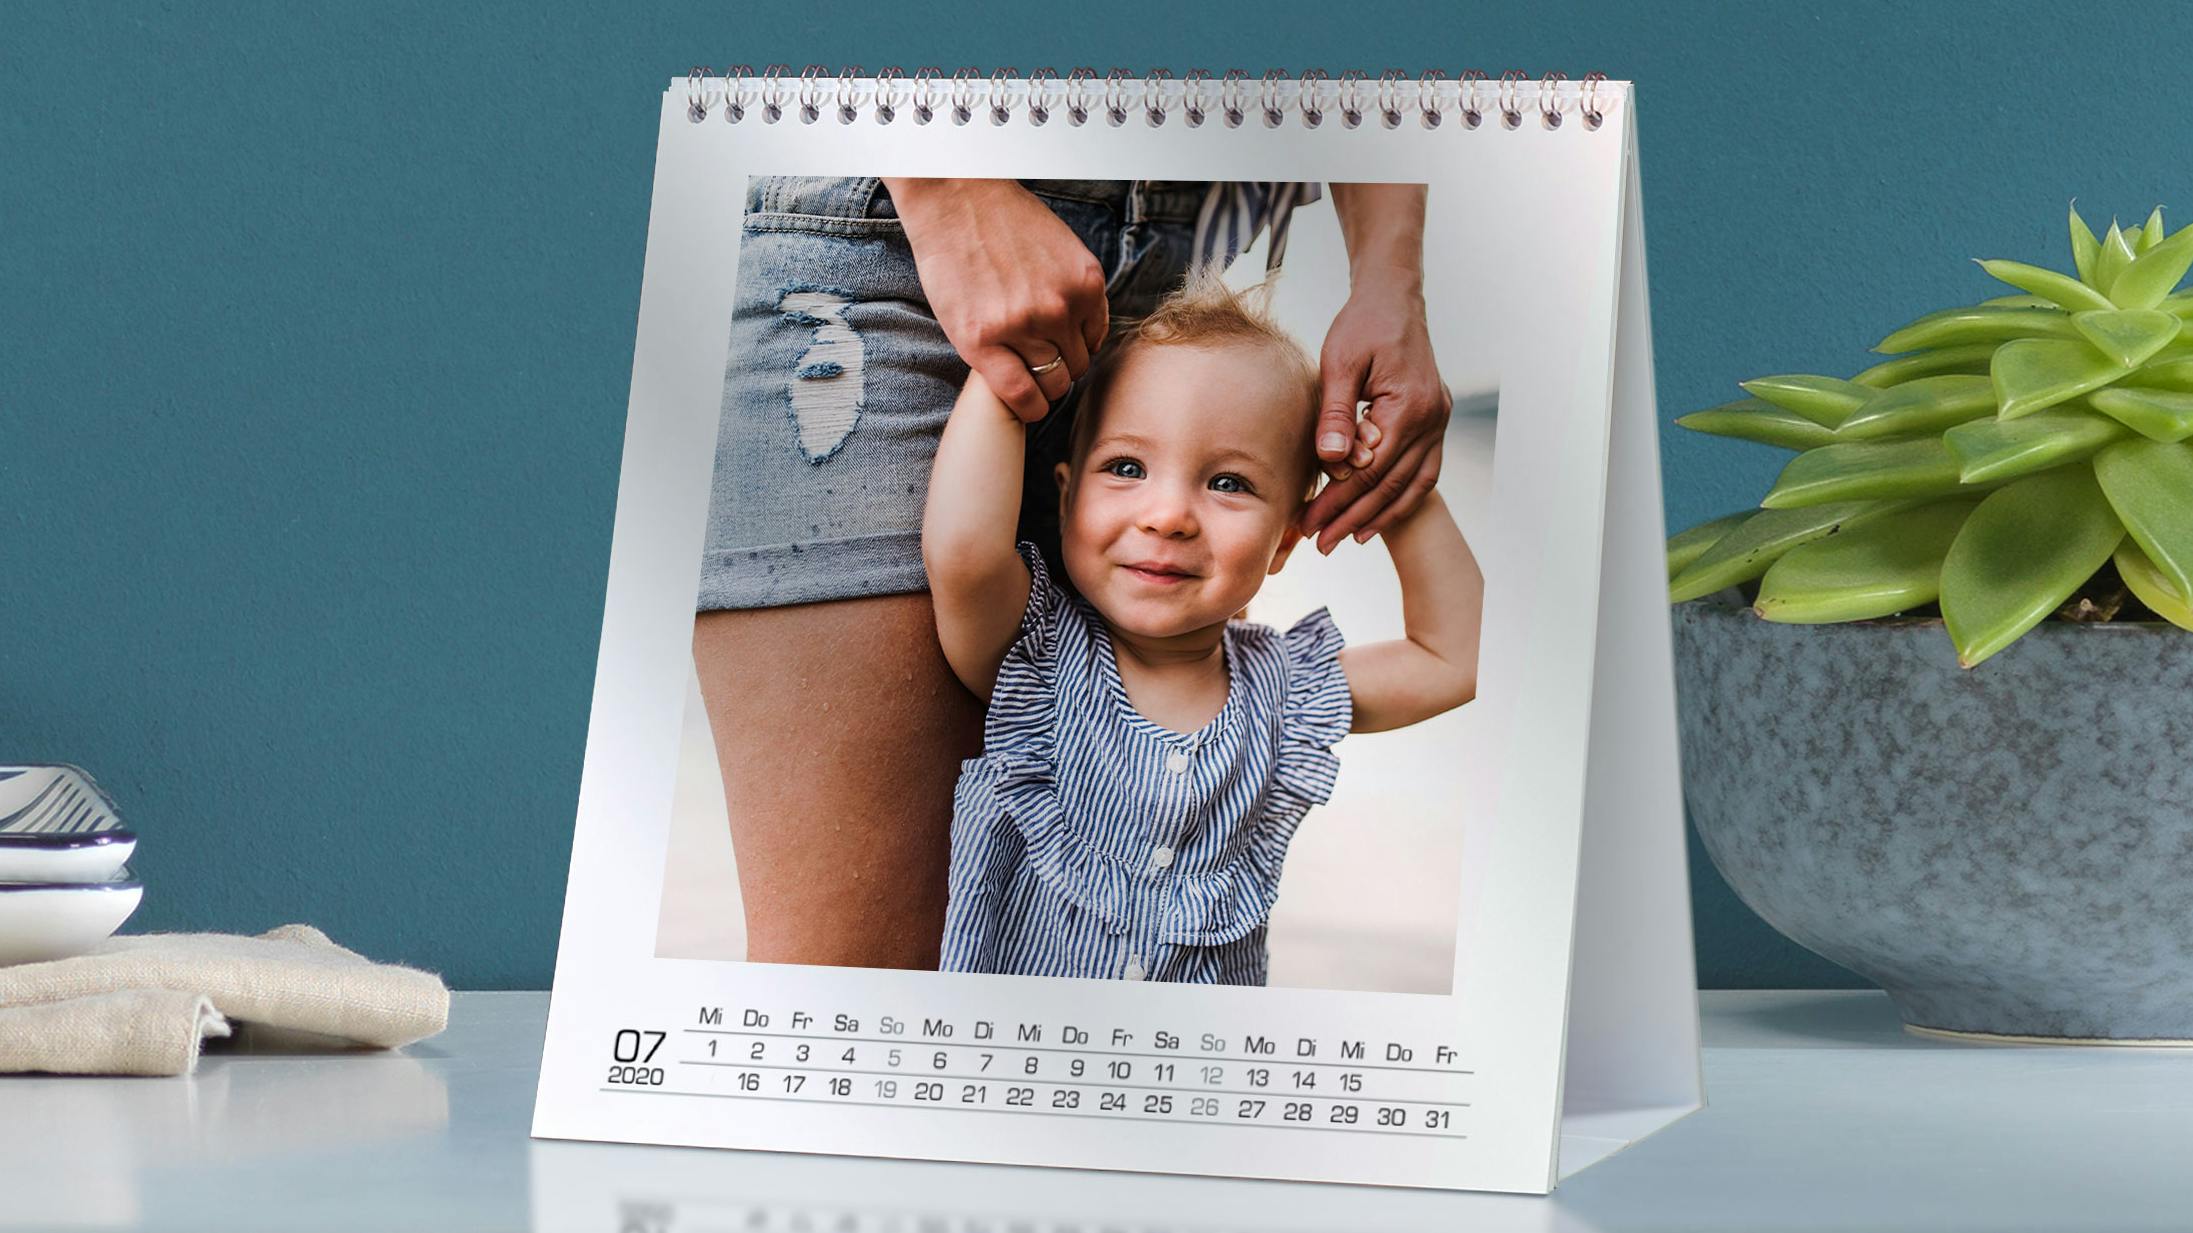 Calendario da tavolo grande con foto di un bambino